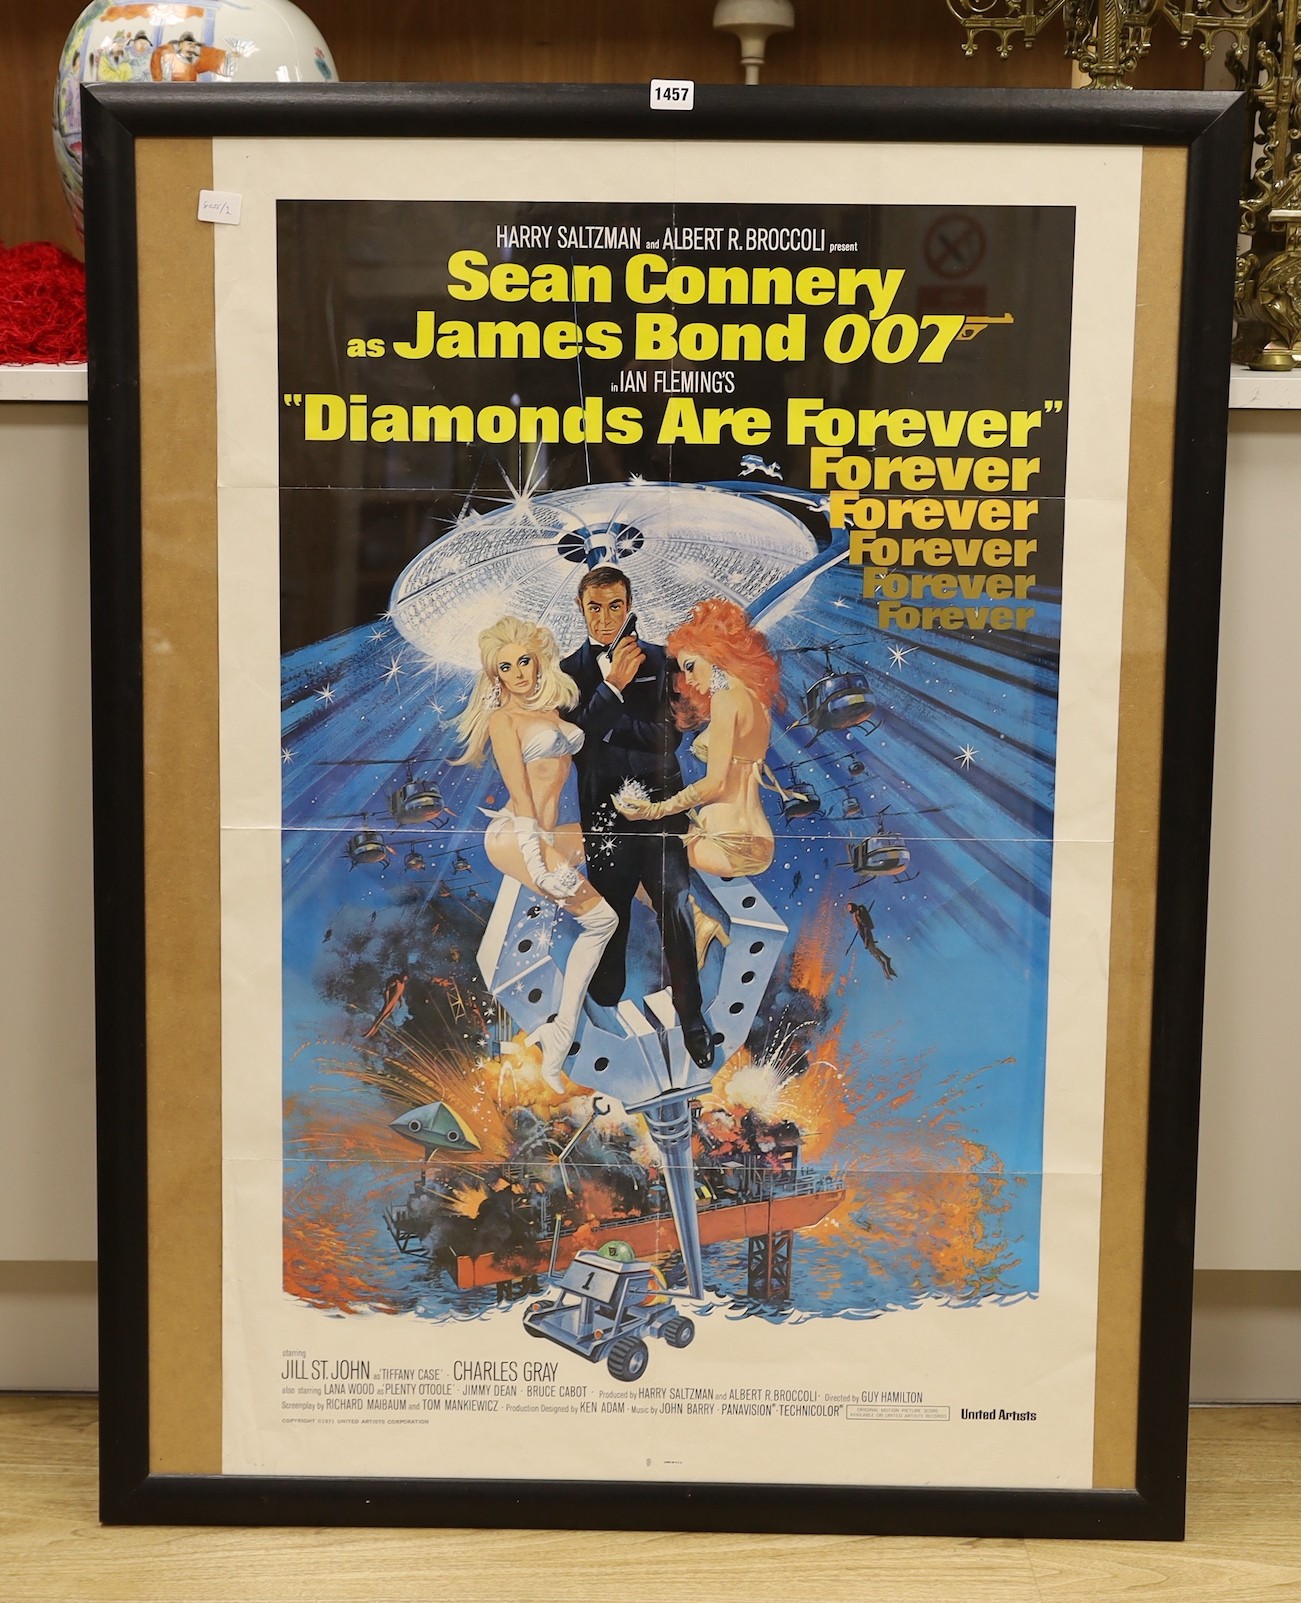 James Bond: Diamonds are Forever (1971) US 1 sheet film poster (framed), 104cms high x 27cms wide